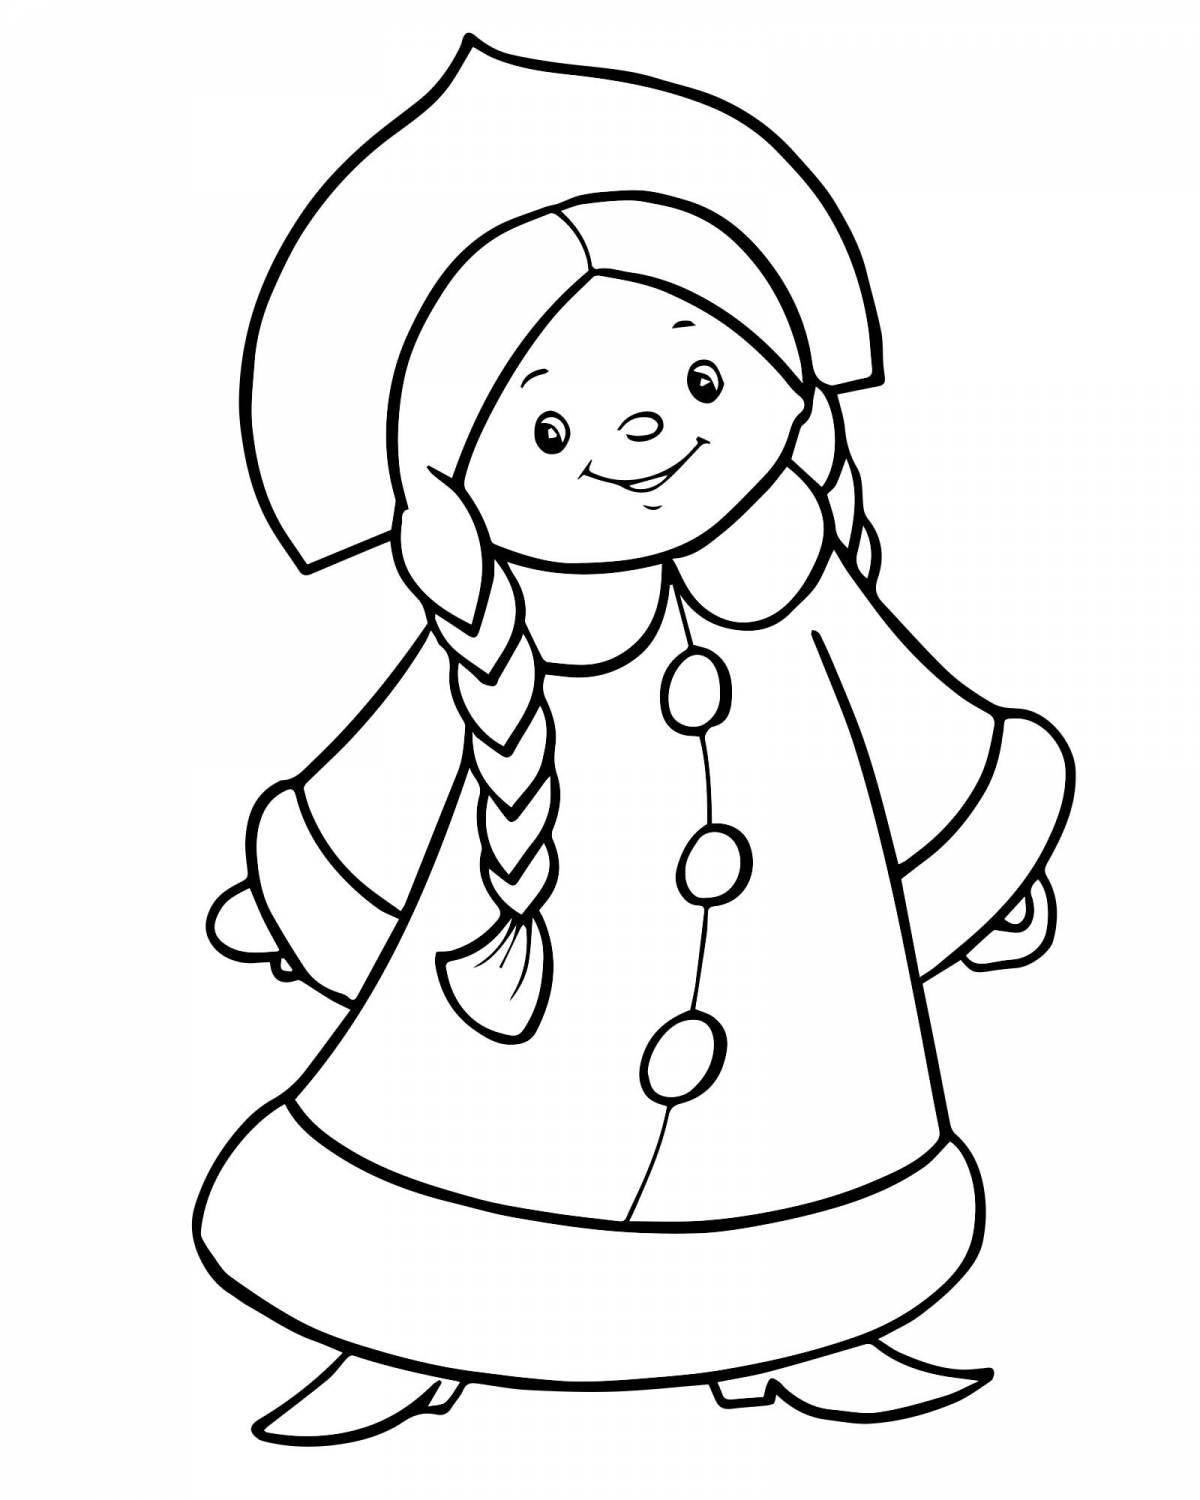 Coloring page joyful snow maiden